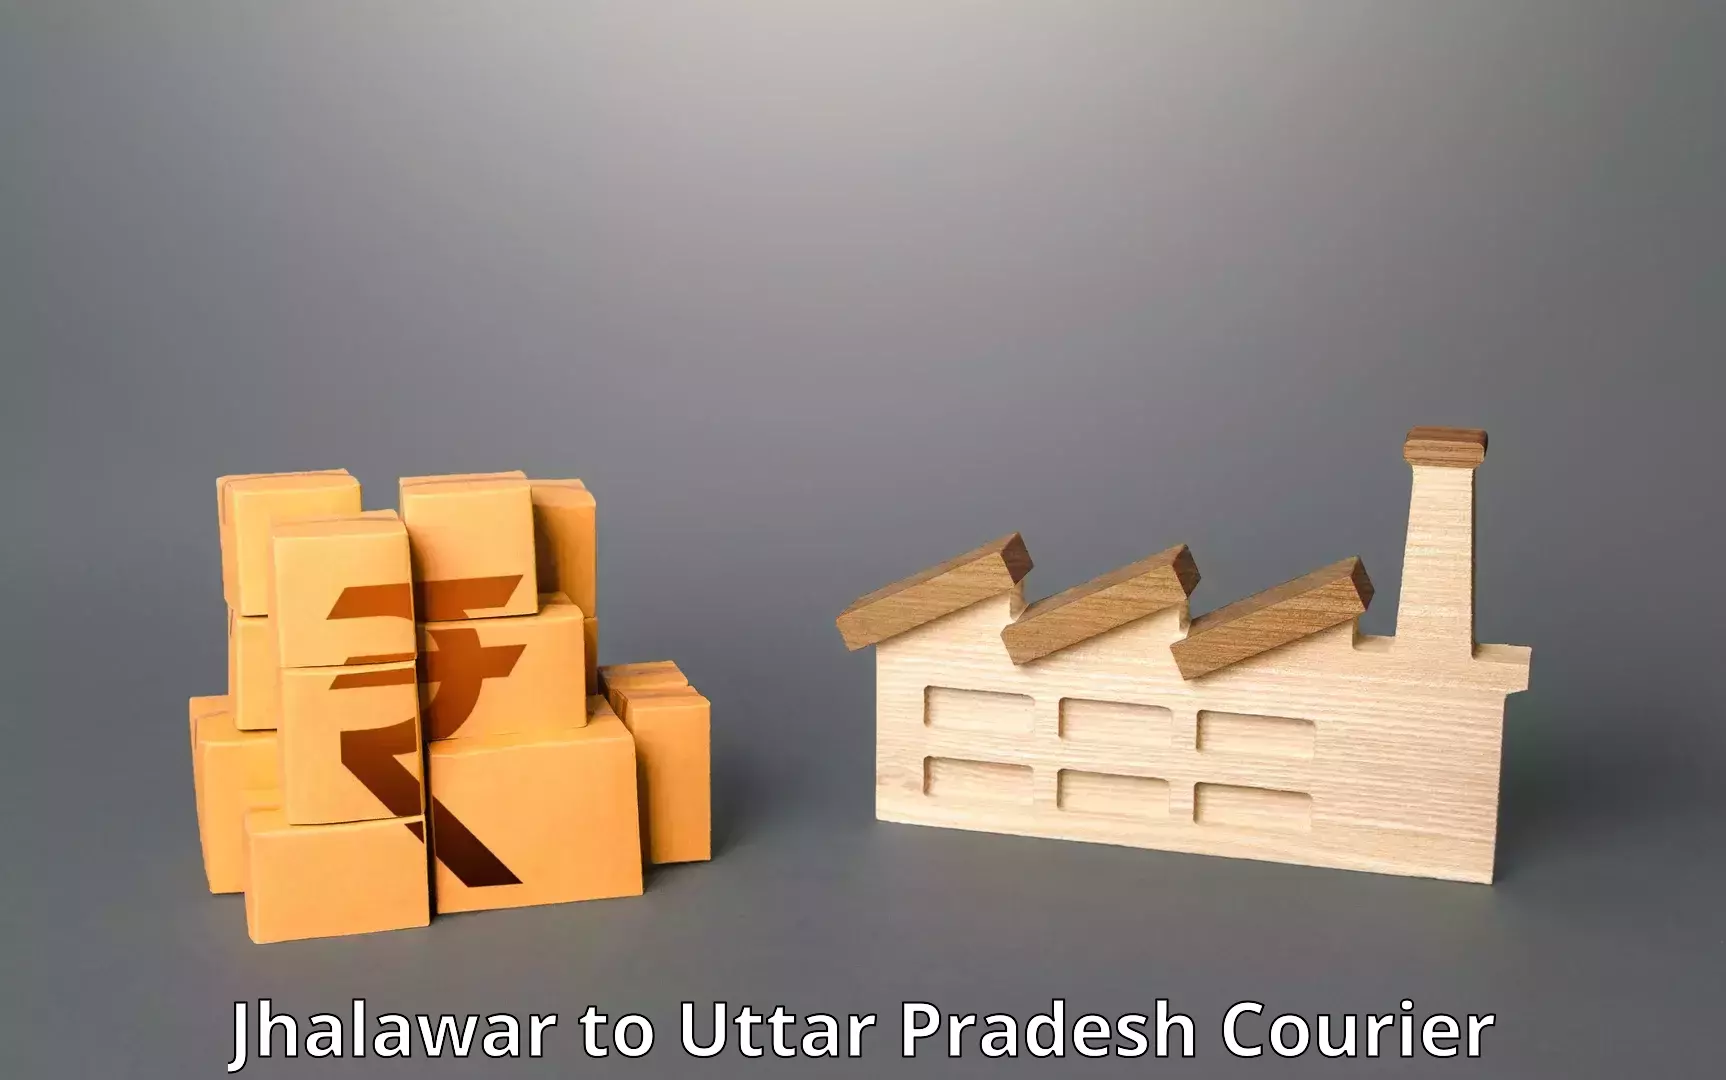 Flexible delivery schedules Jhalawar to Sahatwar